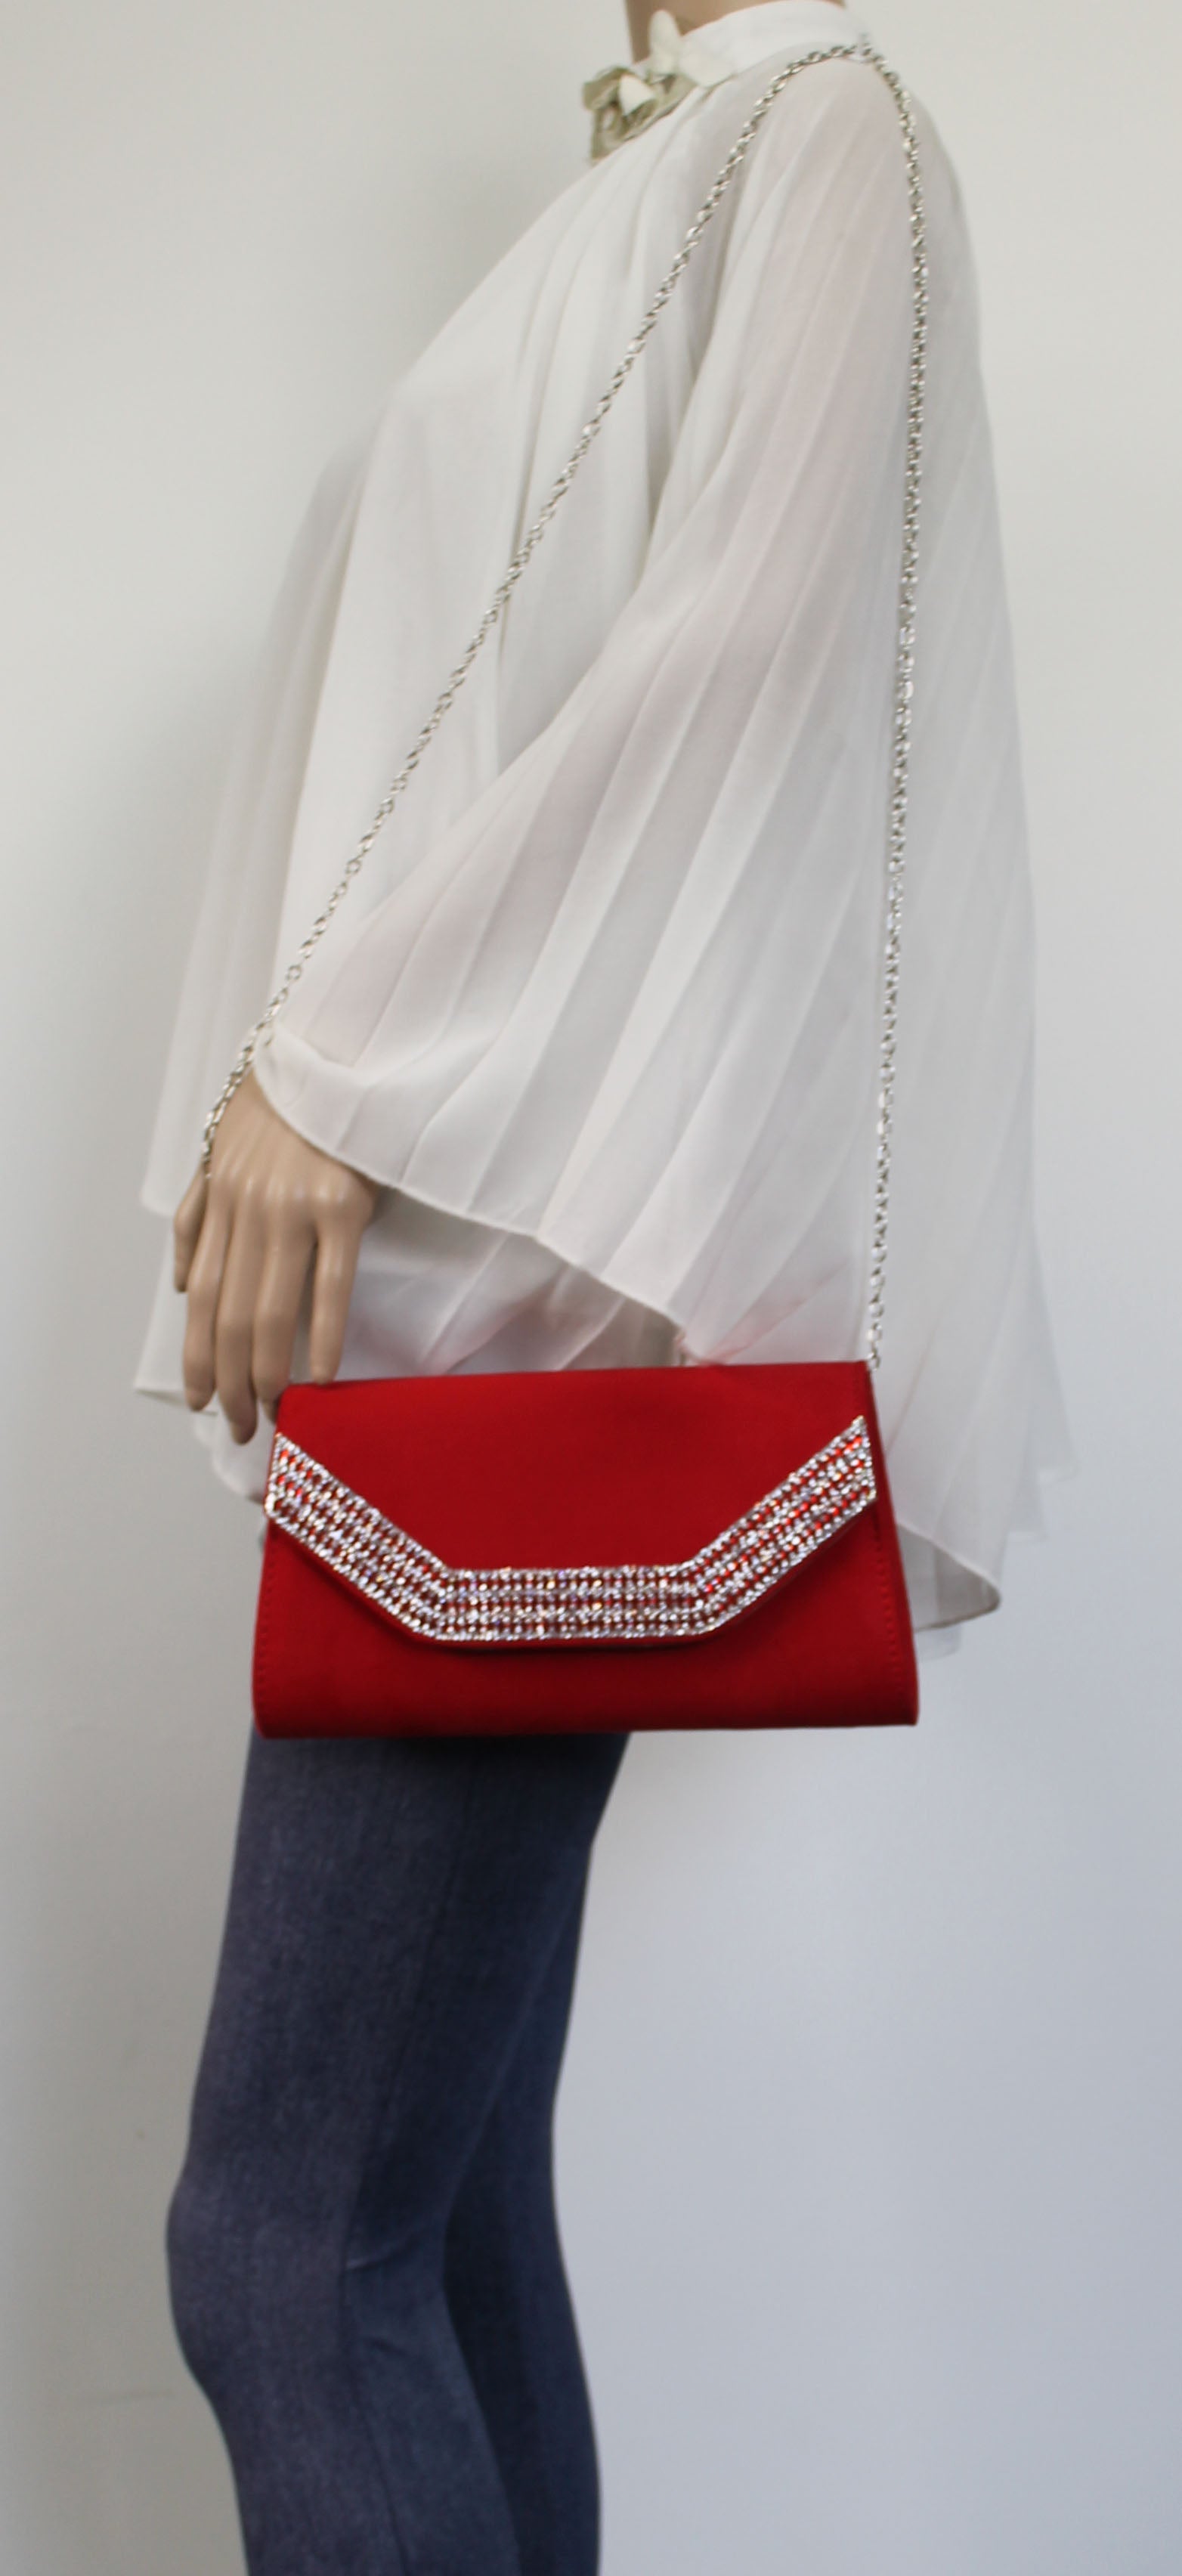 SWANKYSWANS Harper Clutch Bag Red Cute Cheap Clutch Bag For Weddings School and Work